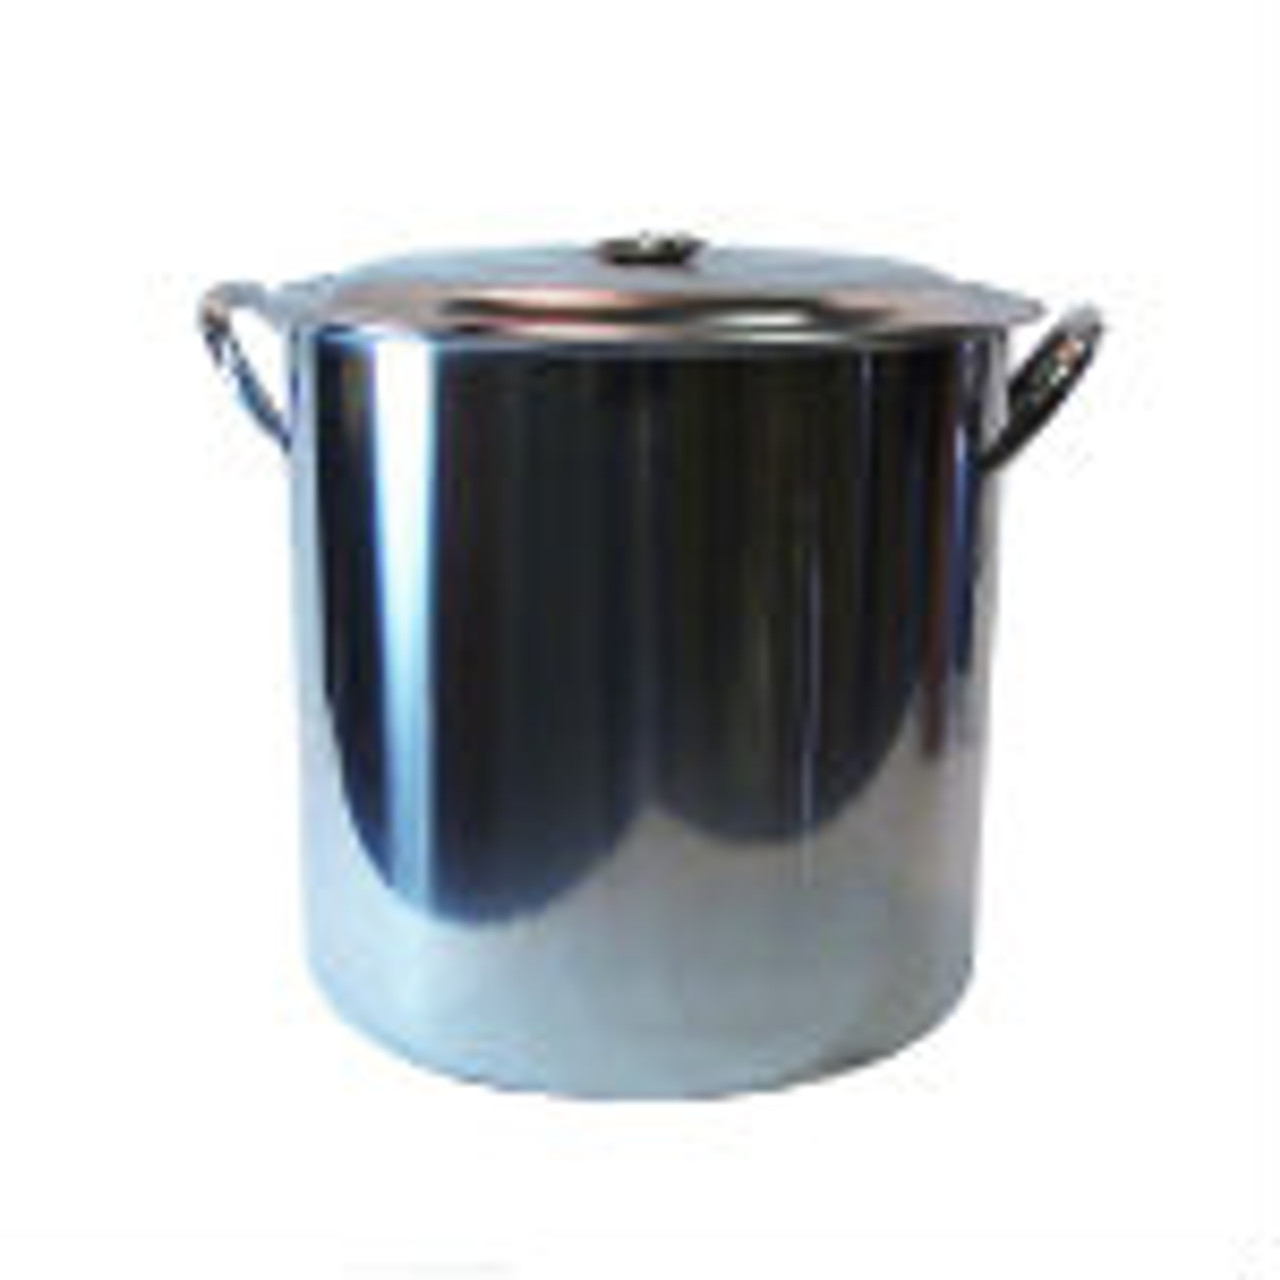 6 gallon cooking pot